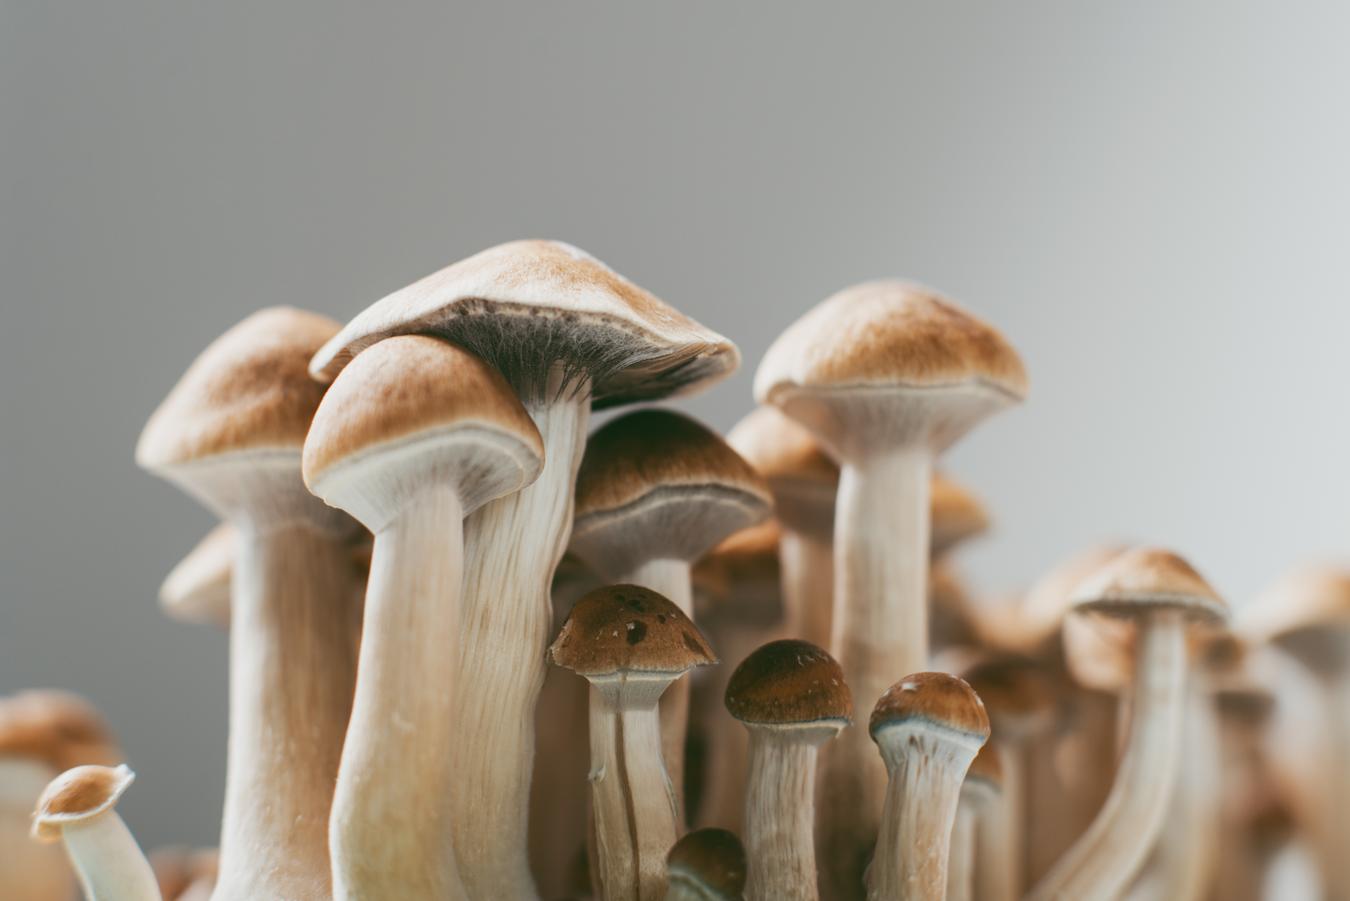 stalks of mushrooms tea research consumed treatment risks hallucinations risk dangerous mood